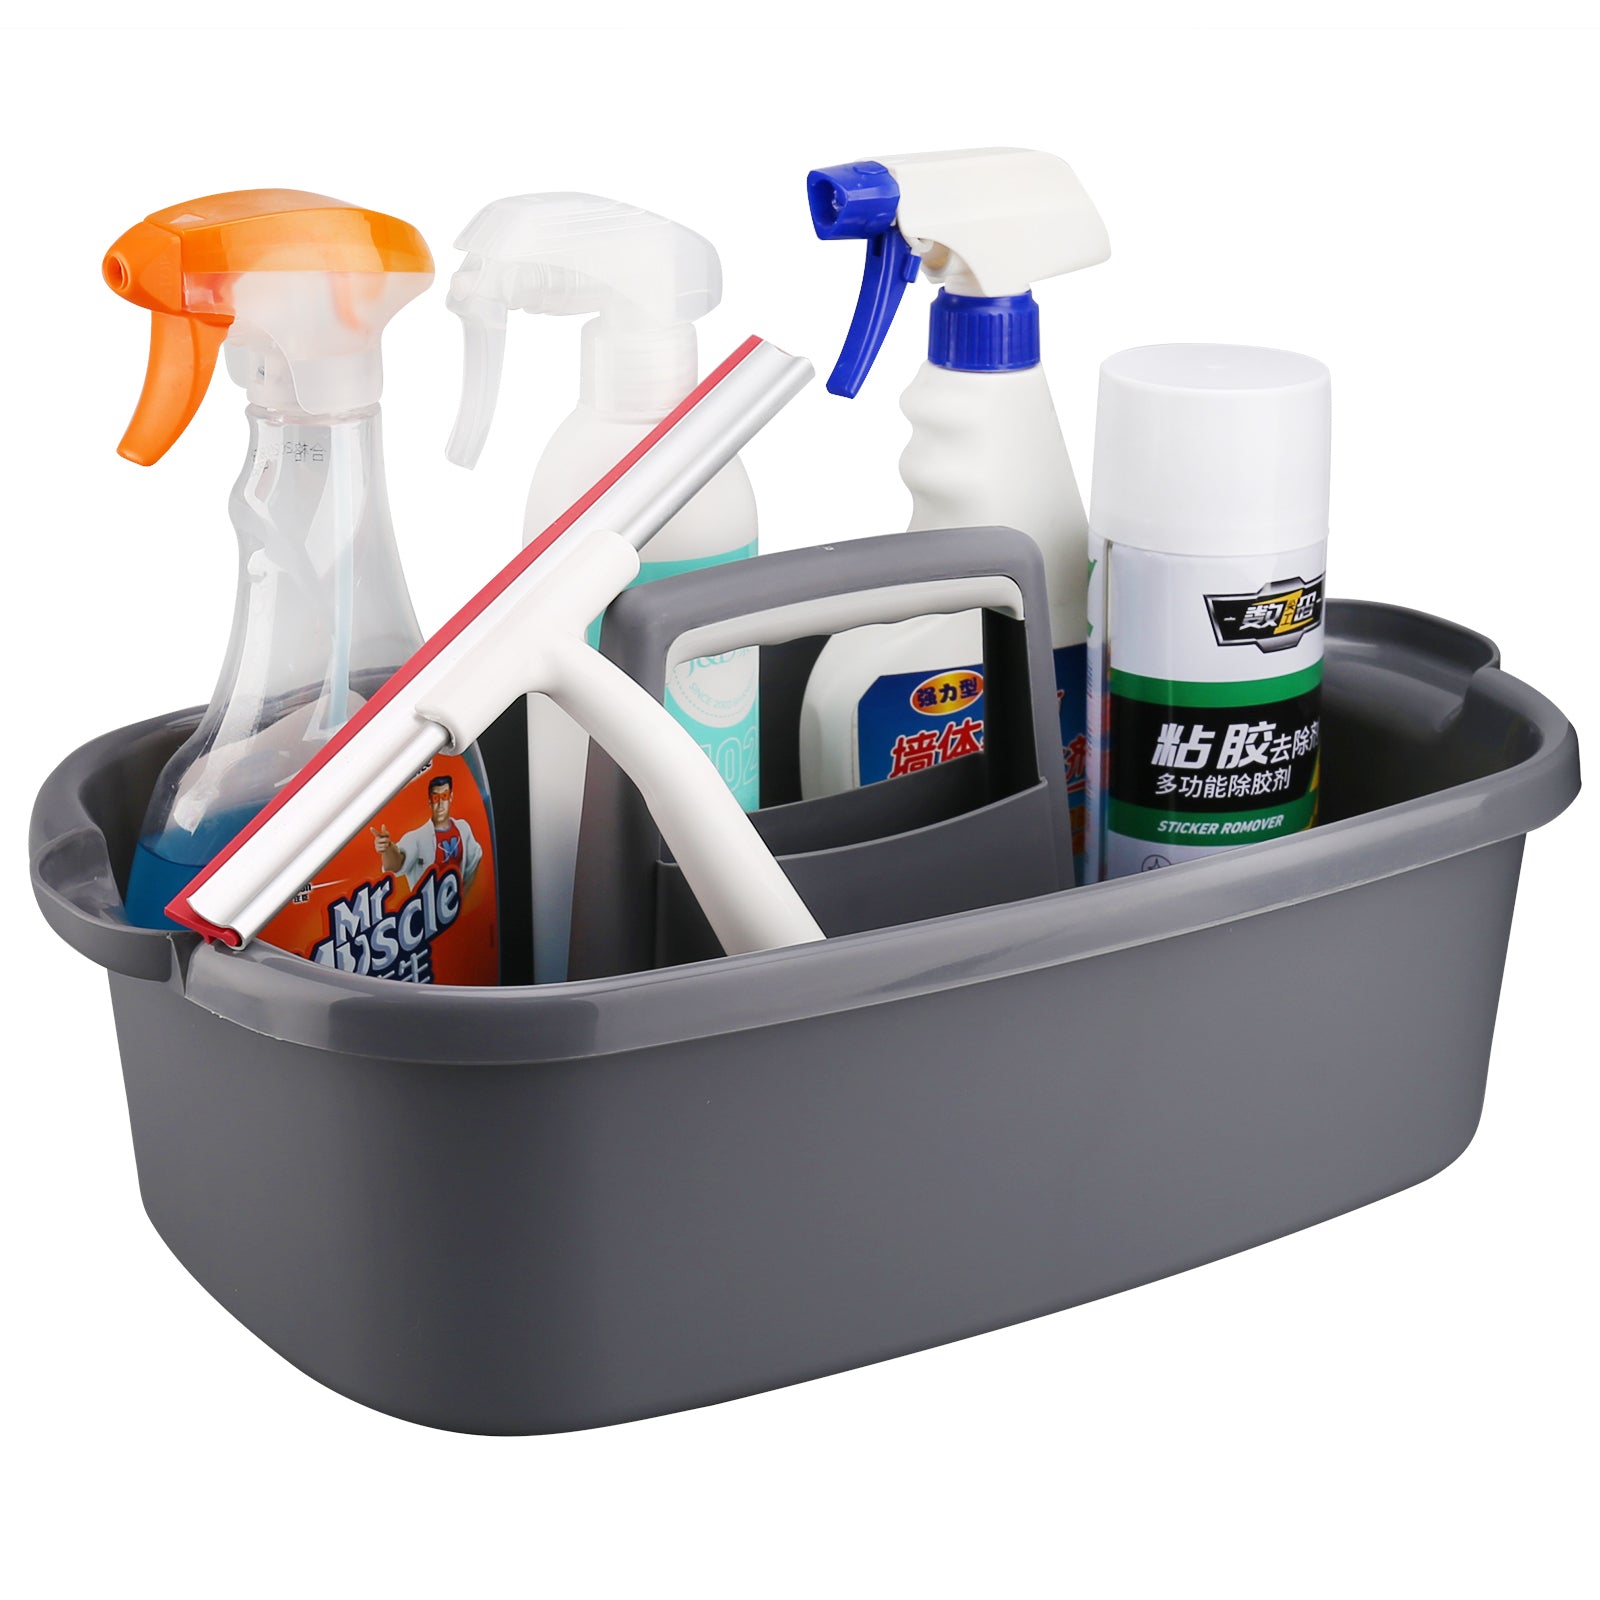 Bisupply Cleaning Supplies Organizer Caddies - 4pk Bathroom Cleaning Caddy Set